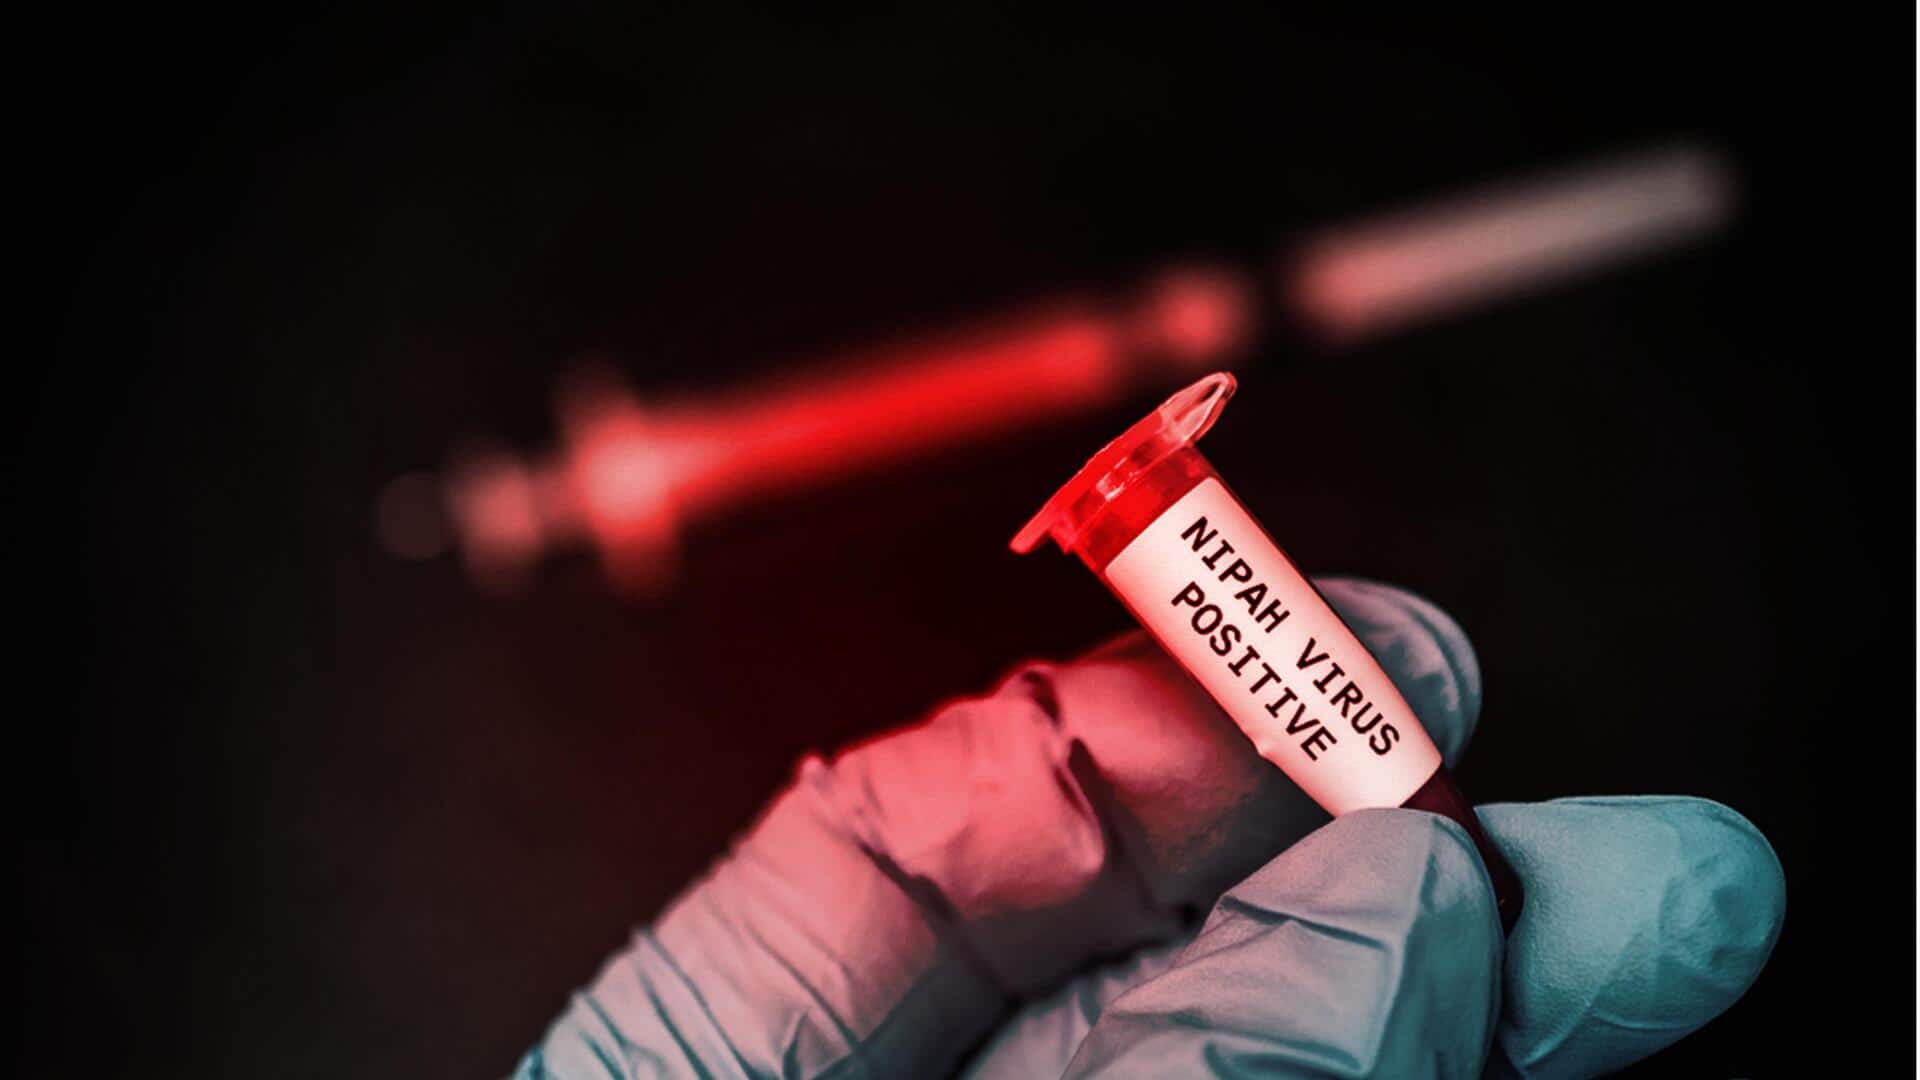 Nipah virus vaccine: ఆక్స్‌ఫర్డ్‌లో మనుషులపై మొదటి నిఫా వైరస్ వ్యాక్సిన్ ప్రయోగాలు షురూ 